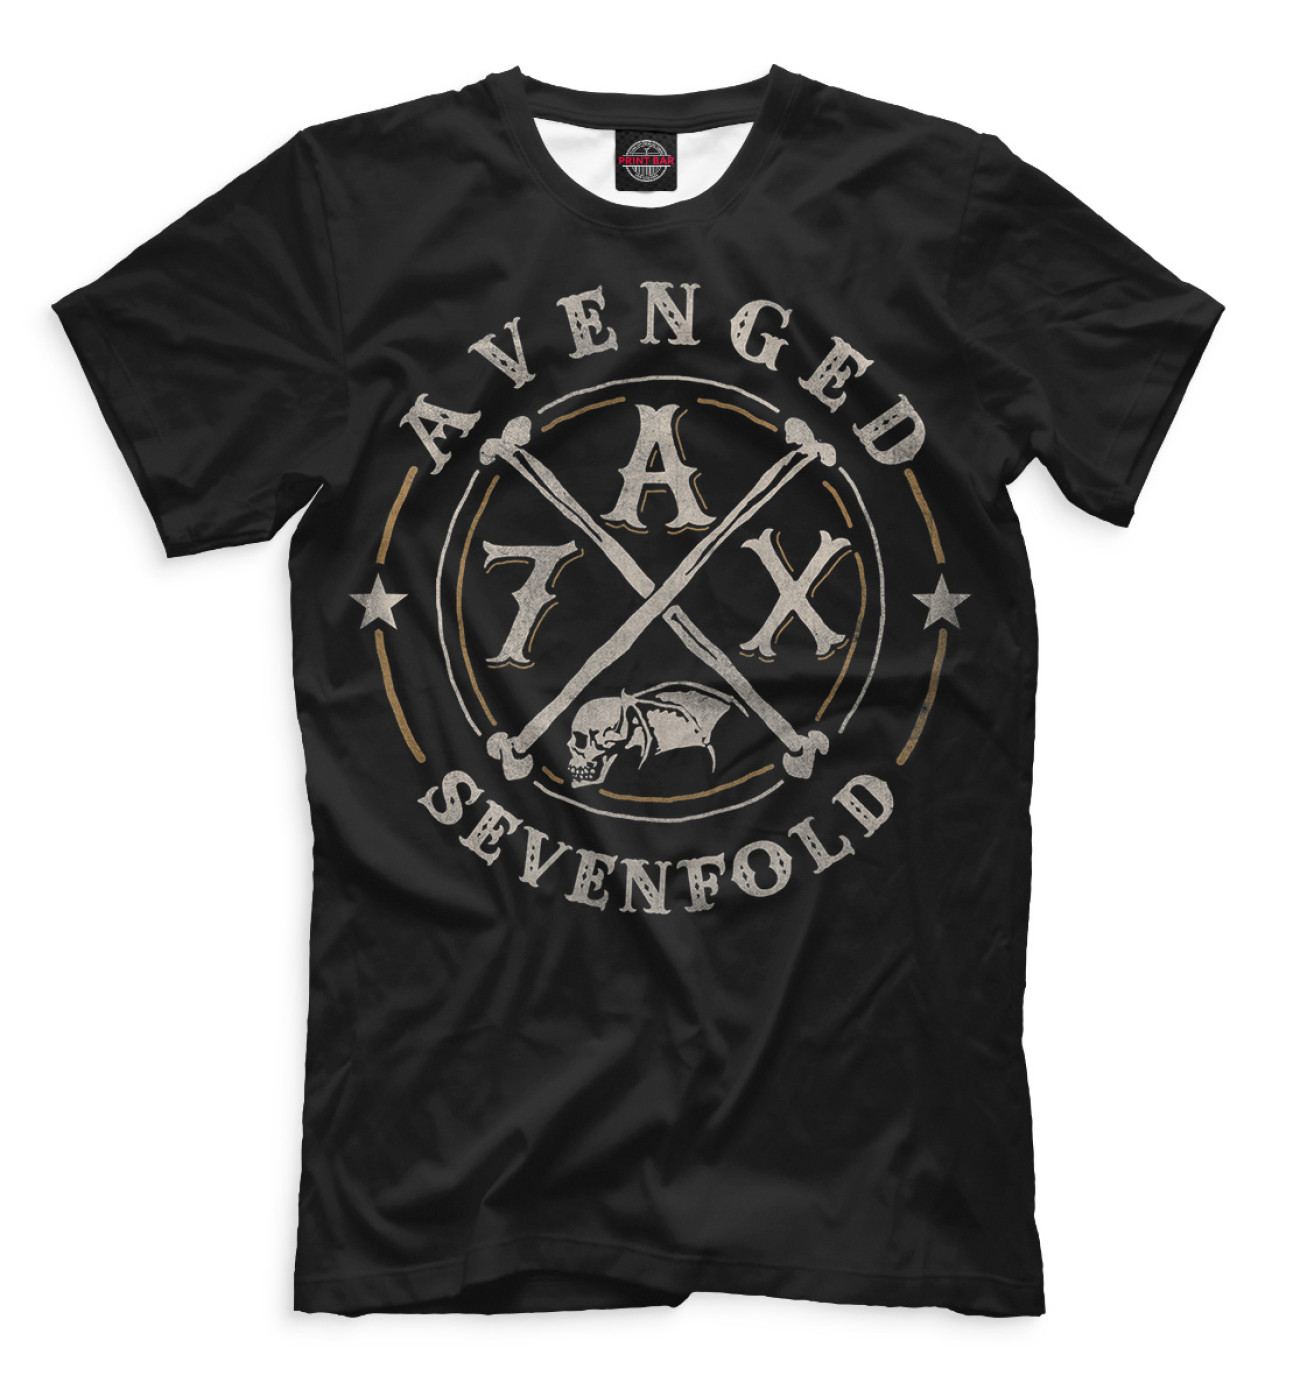 Мужская Футболка Avenged Sevenfold, артикул: AVE-620548-fut-2